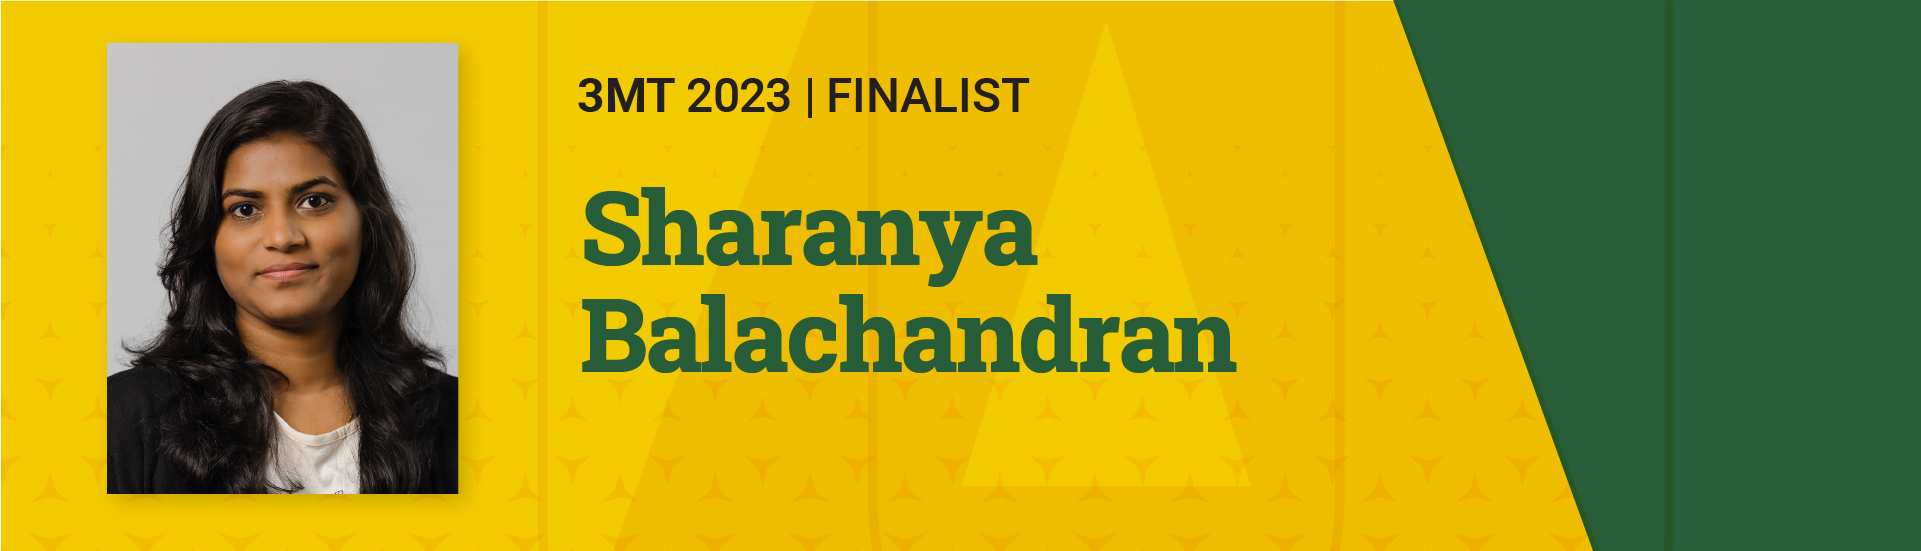 3MT 2023 Finalist  Sharanya Balachandran 